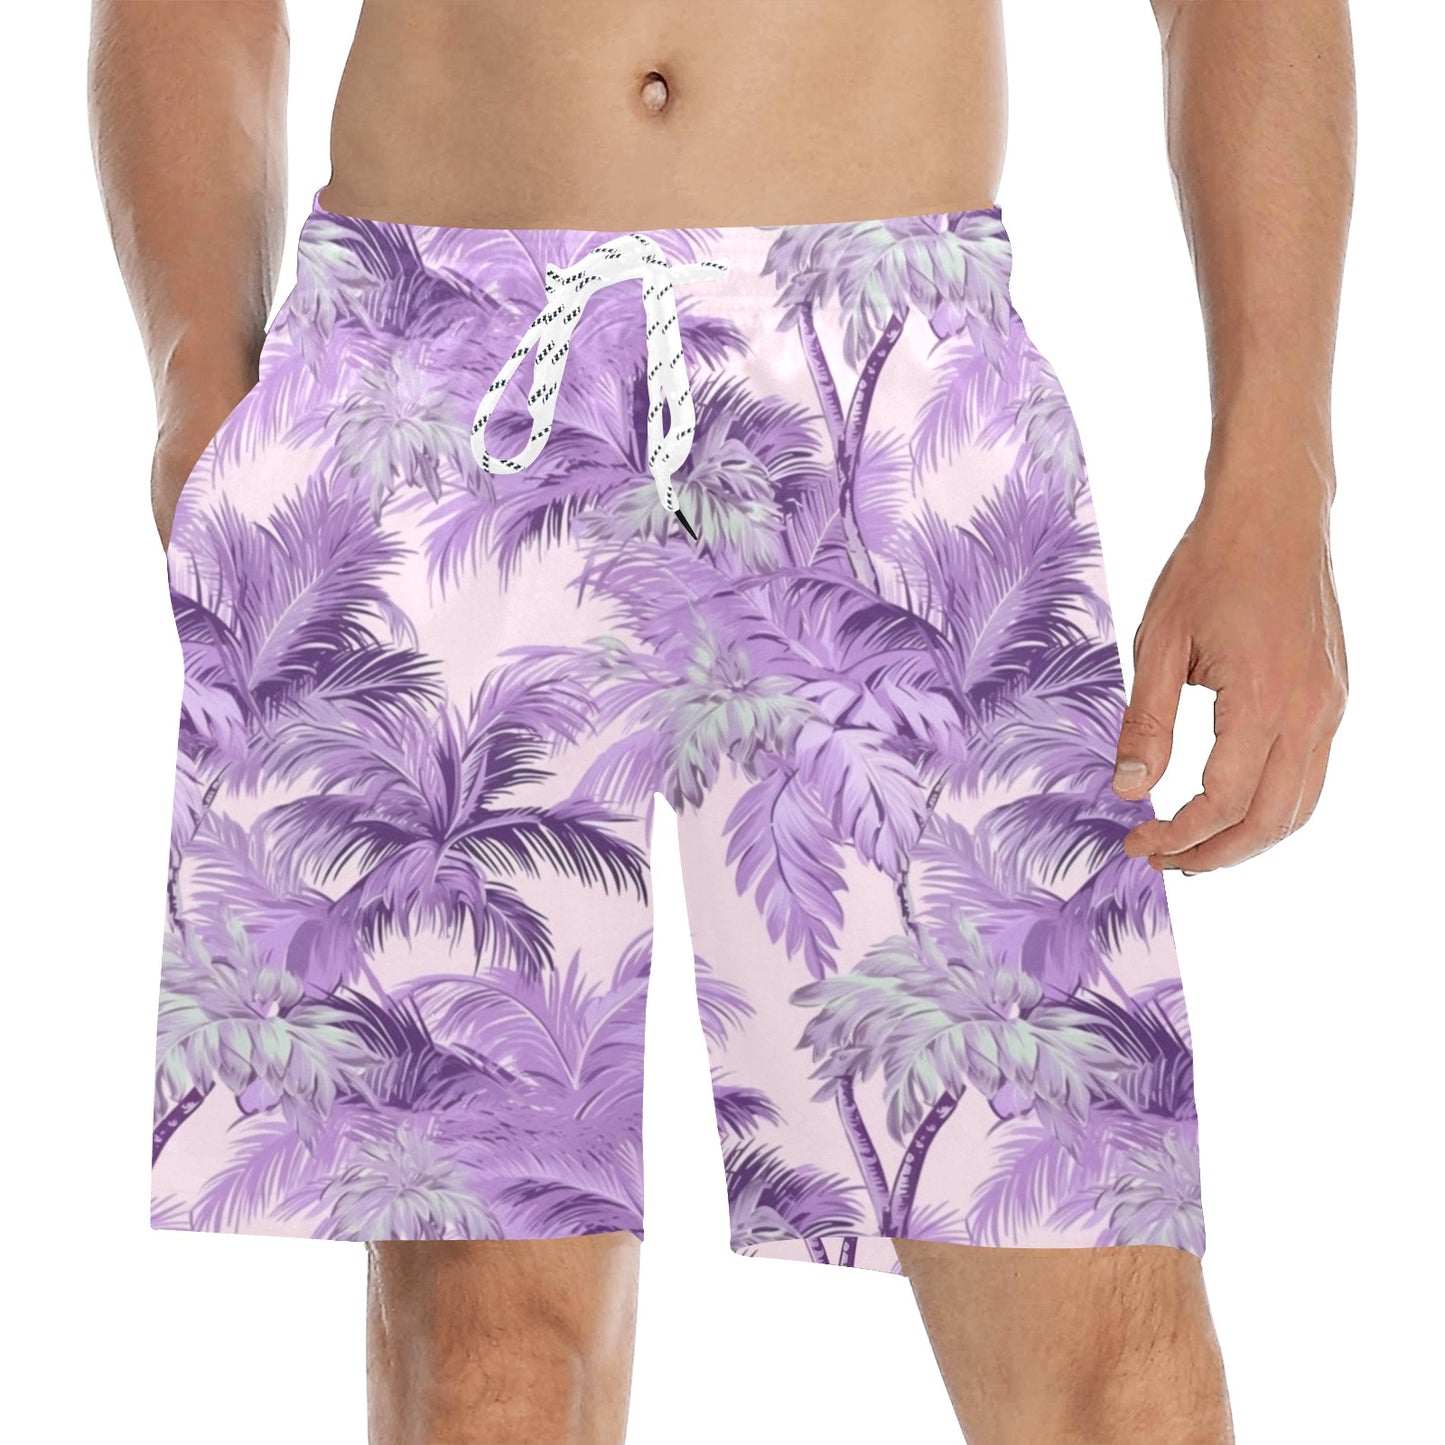 Lavender Men Mid Length Shorts, Palm Tree Lilac Purple Beach Swim Trunks Front Back Pockets Mesh Drawstring Boys Casual Bathing Suit Summer Starcove Fashion